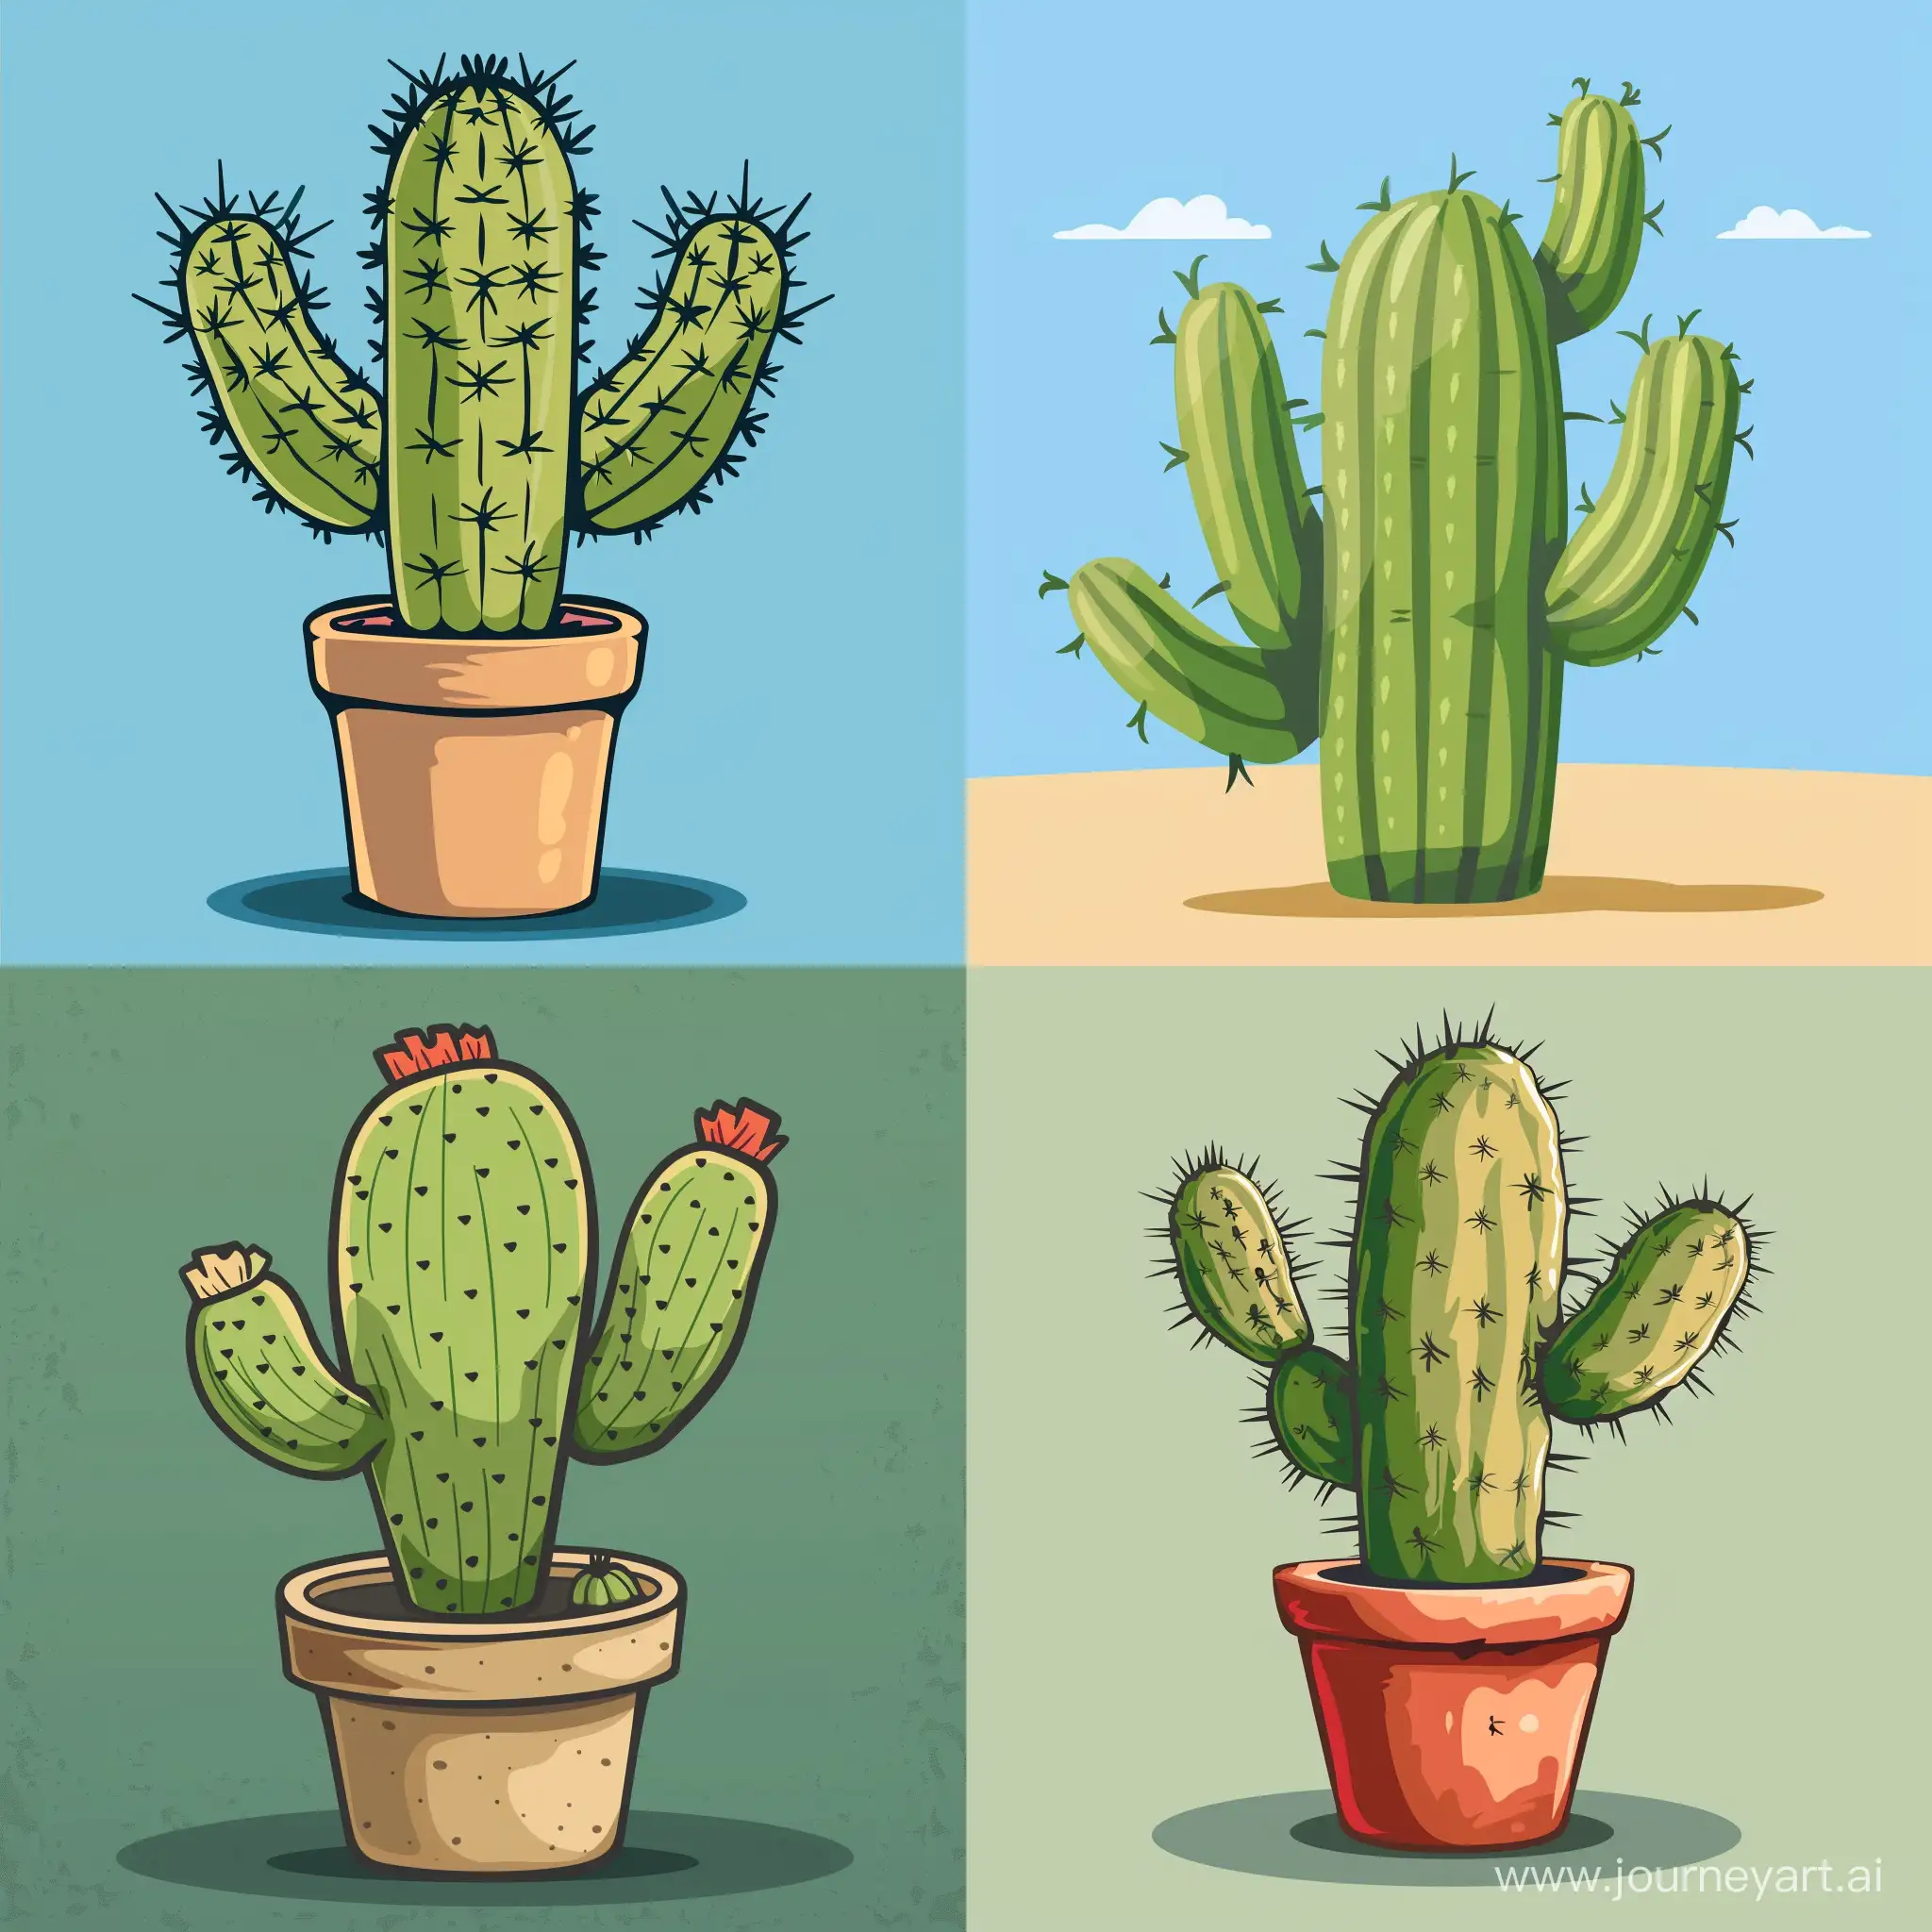 Playful-Cartoon-Cactus-Characters-Dancing-in-a-Desert-Oasis